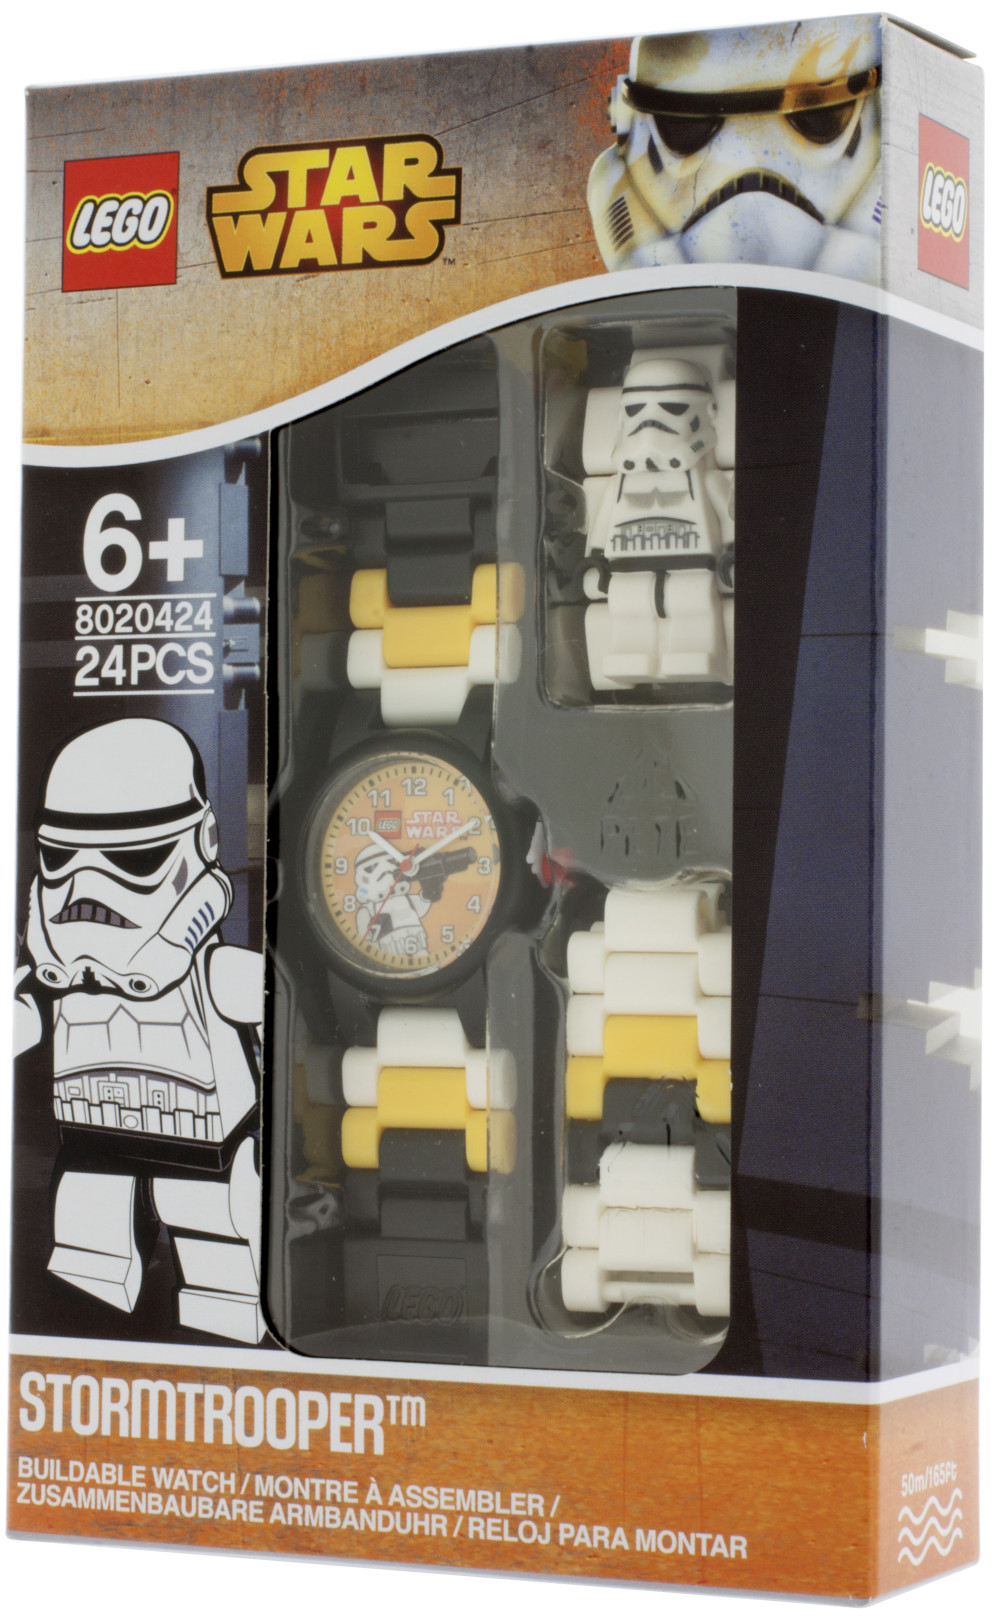   LEGO: Star Wars  Stormtrooper ()